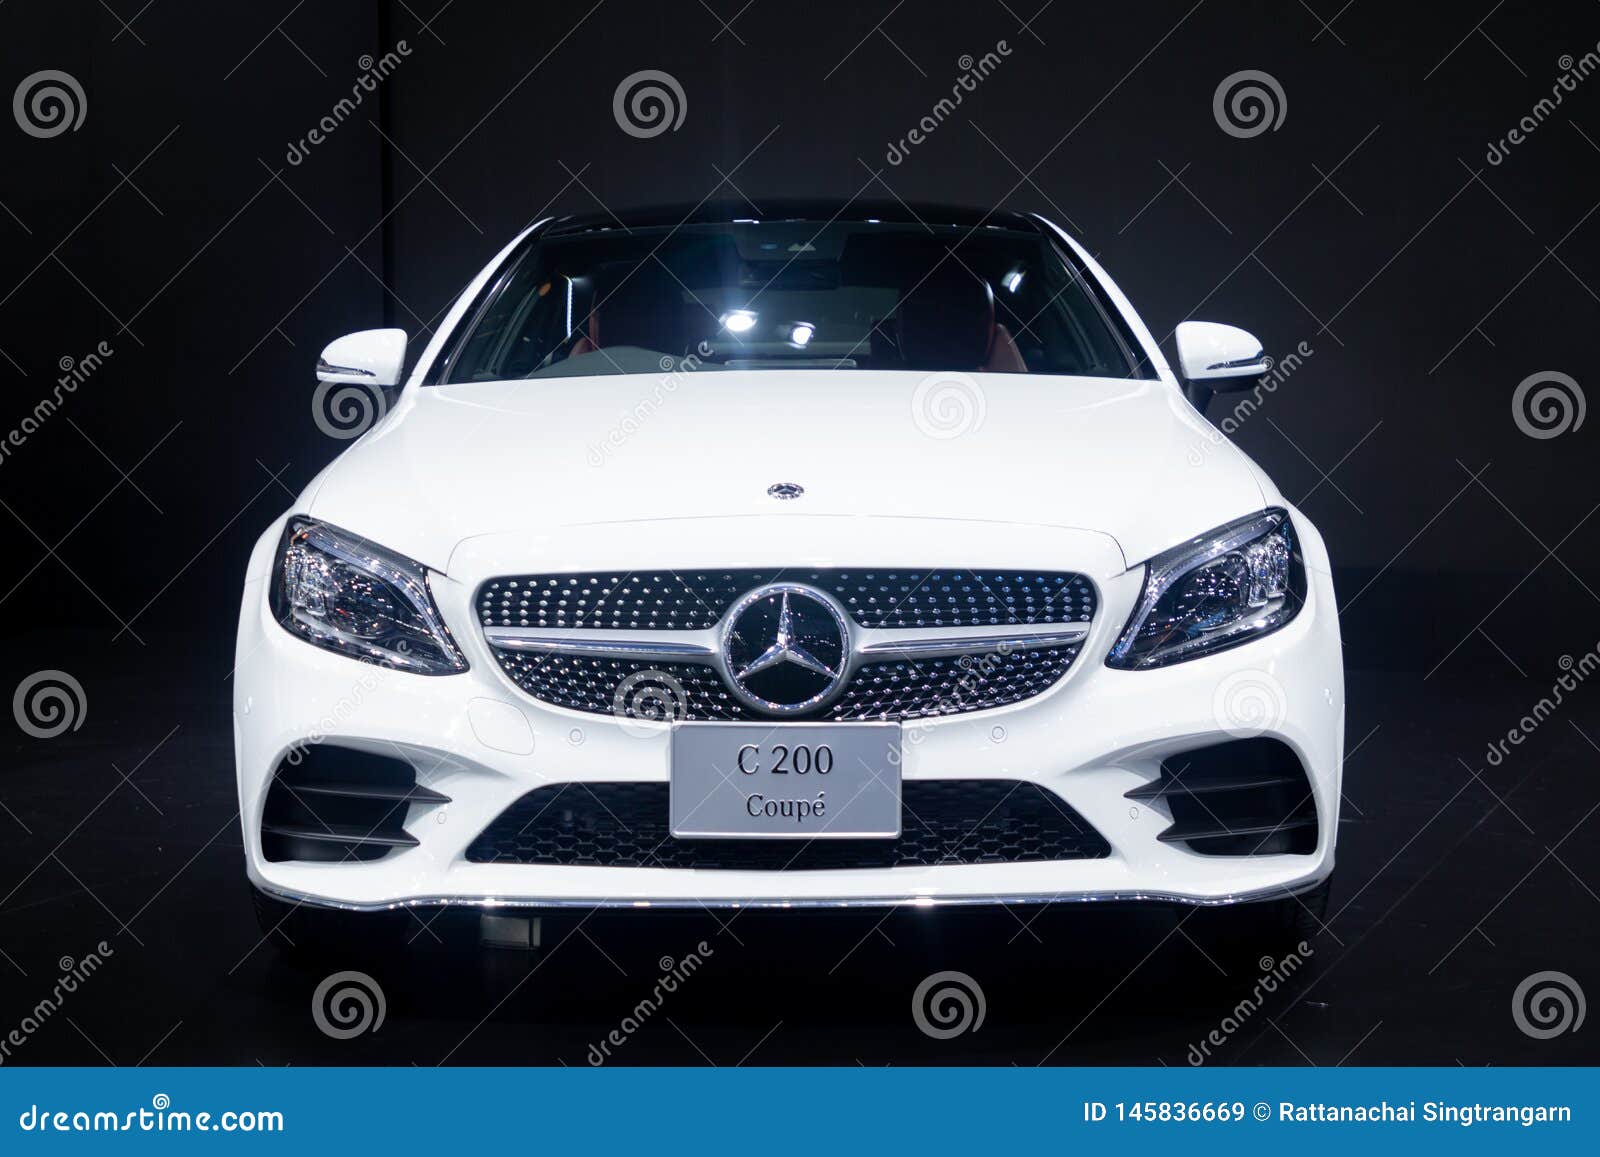 Mercedes blanche model